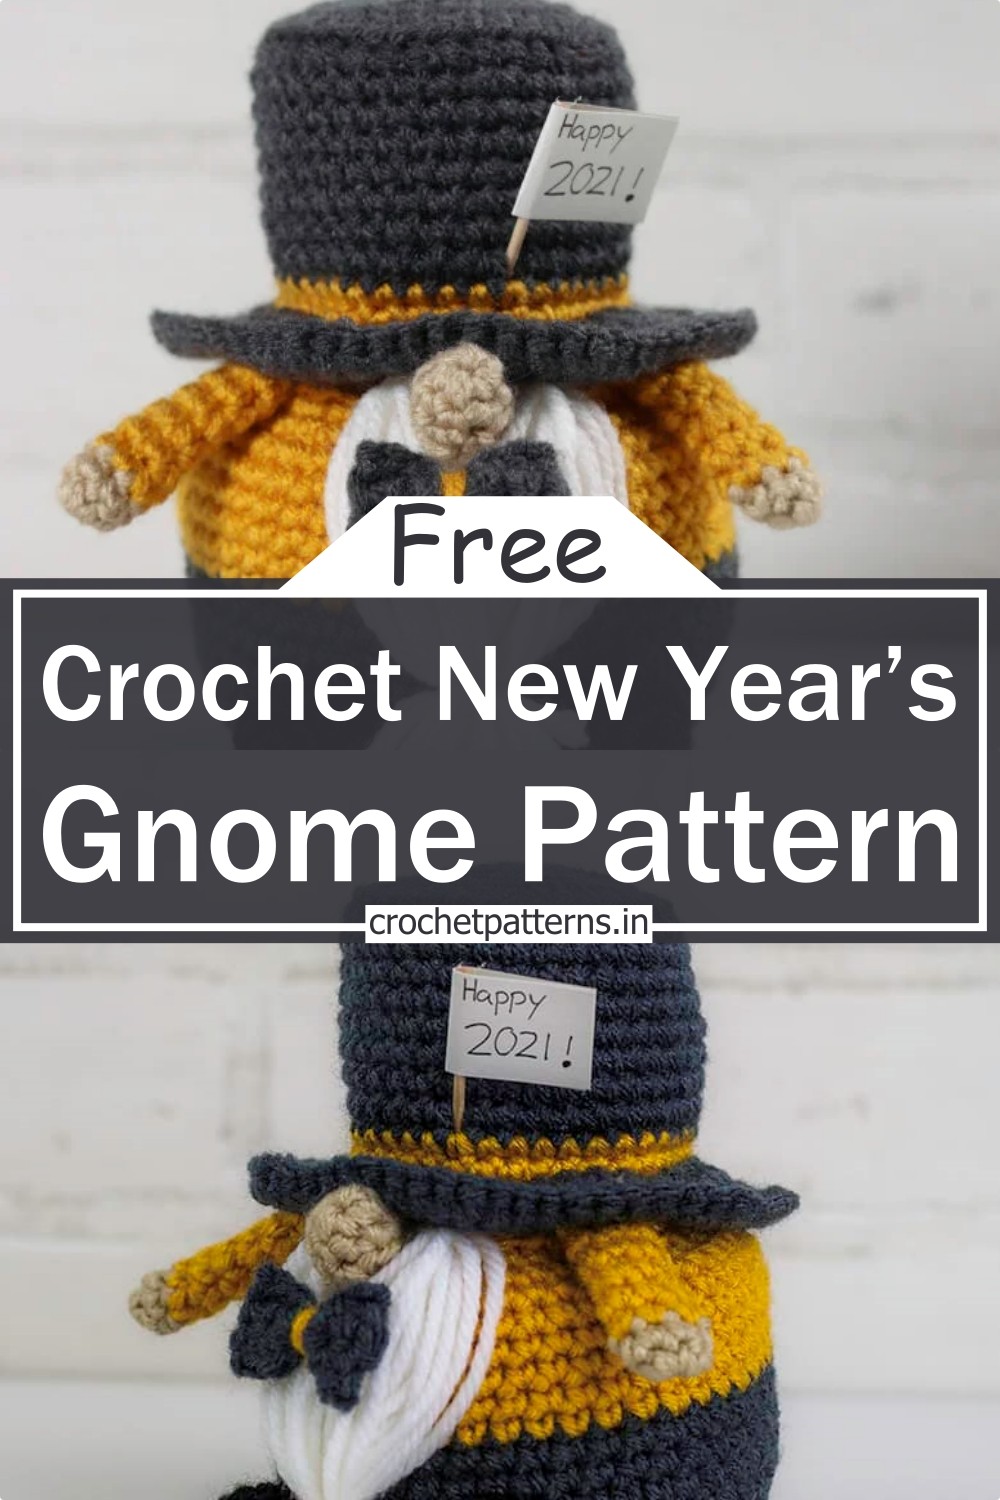 Crochet New Year’s Gnome Pattern